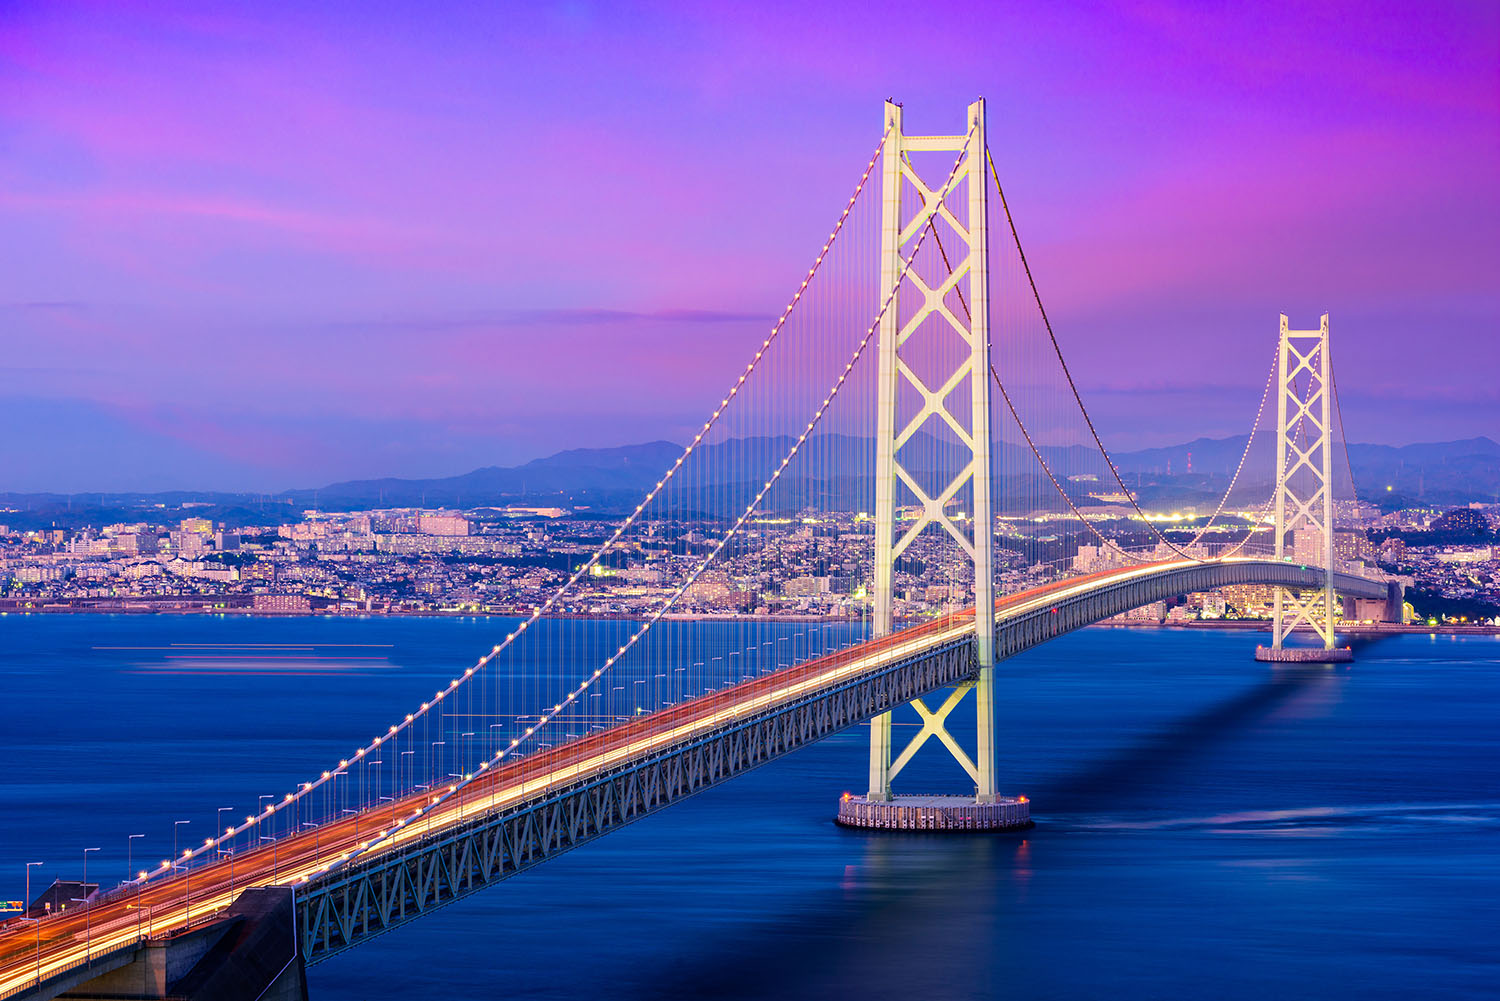 AKASHI KAIKYO PEARL BRIDGE – WORLD'S LARGEST SUSPENSION BRIDGE - OYAKATA